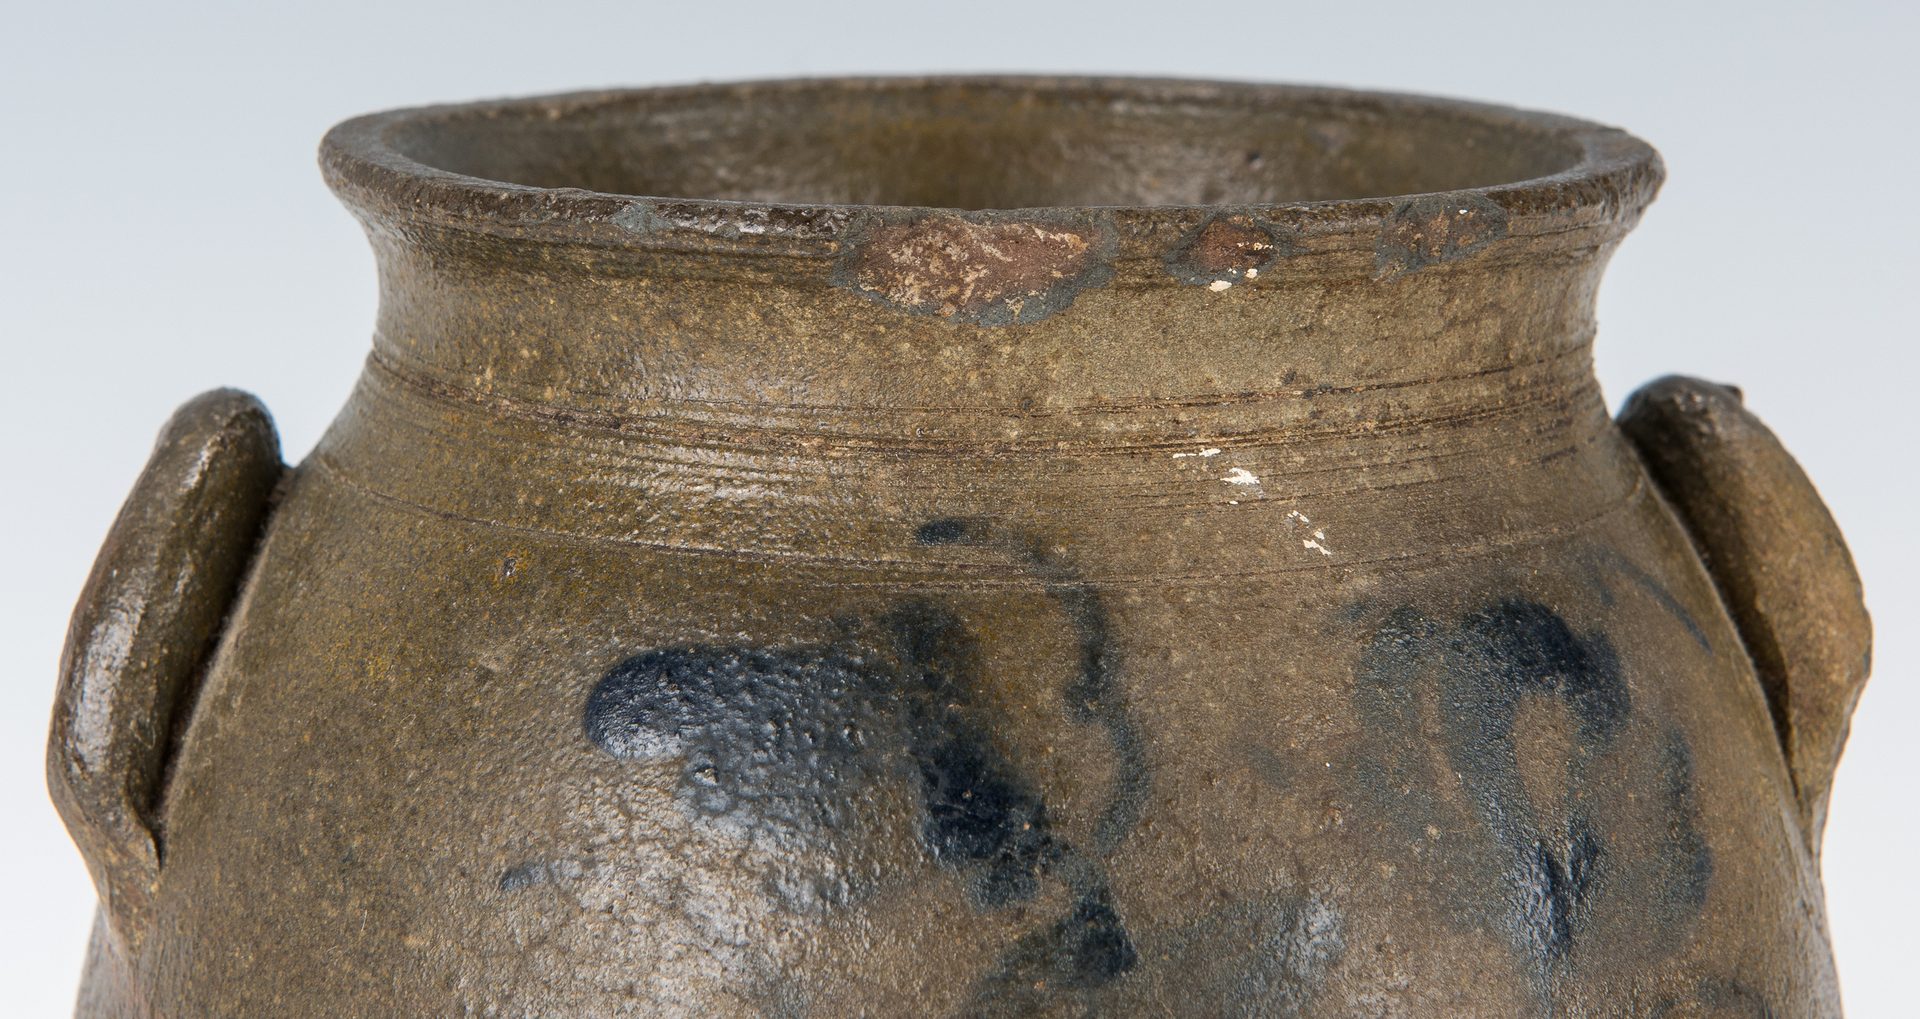 Lot 160: Small Southwest VA Stoneware Jar, Cobalt Decorated, Exhibited